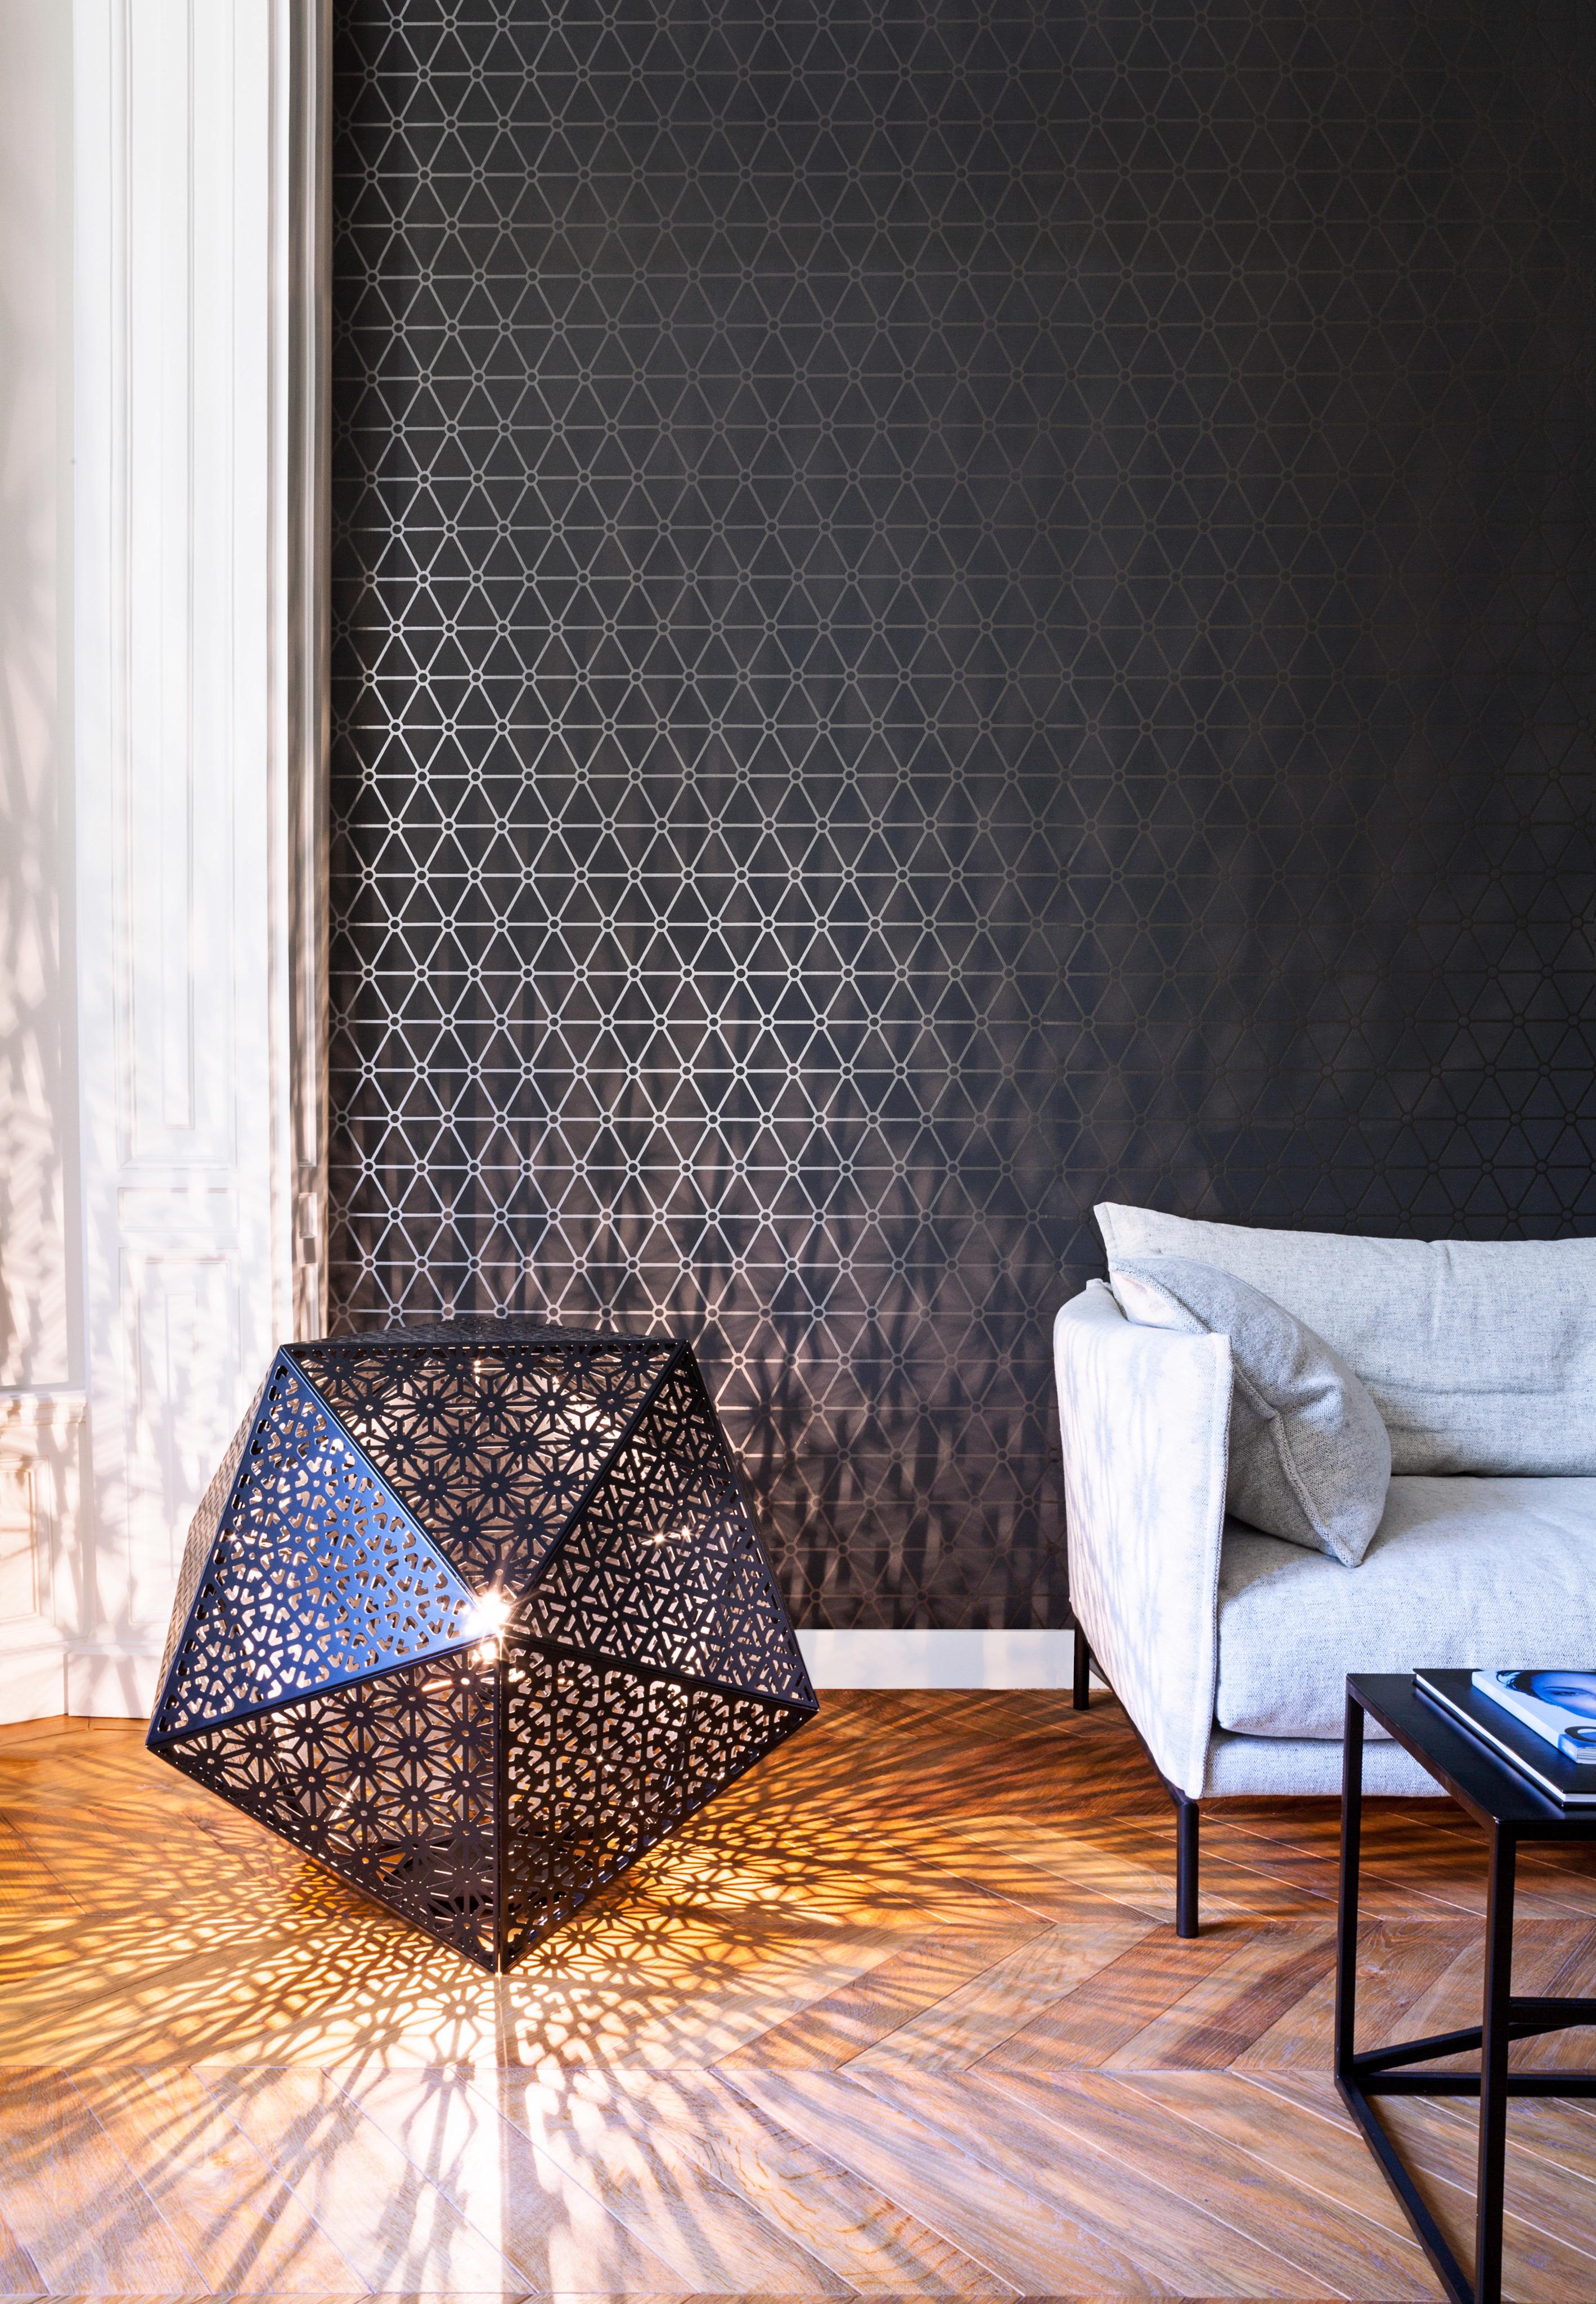 Mustertapete mit Dreiecksmuster #sofa #grauessofa #mustertapete #fischgrätparkett ©BN Wallcoverings